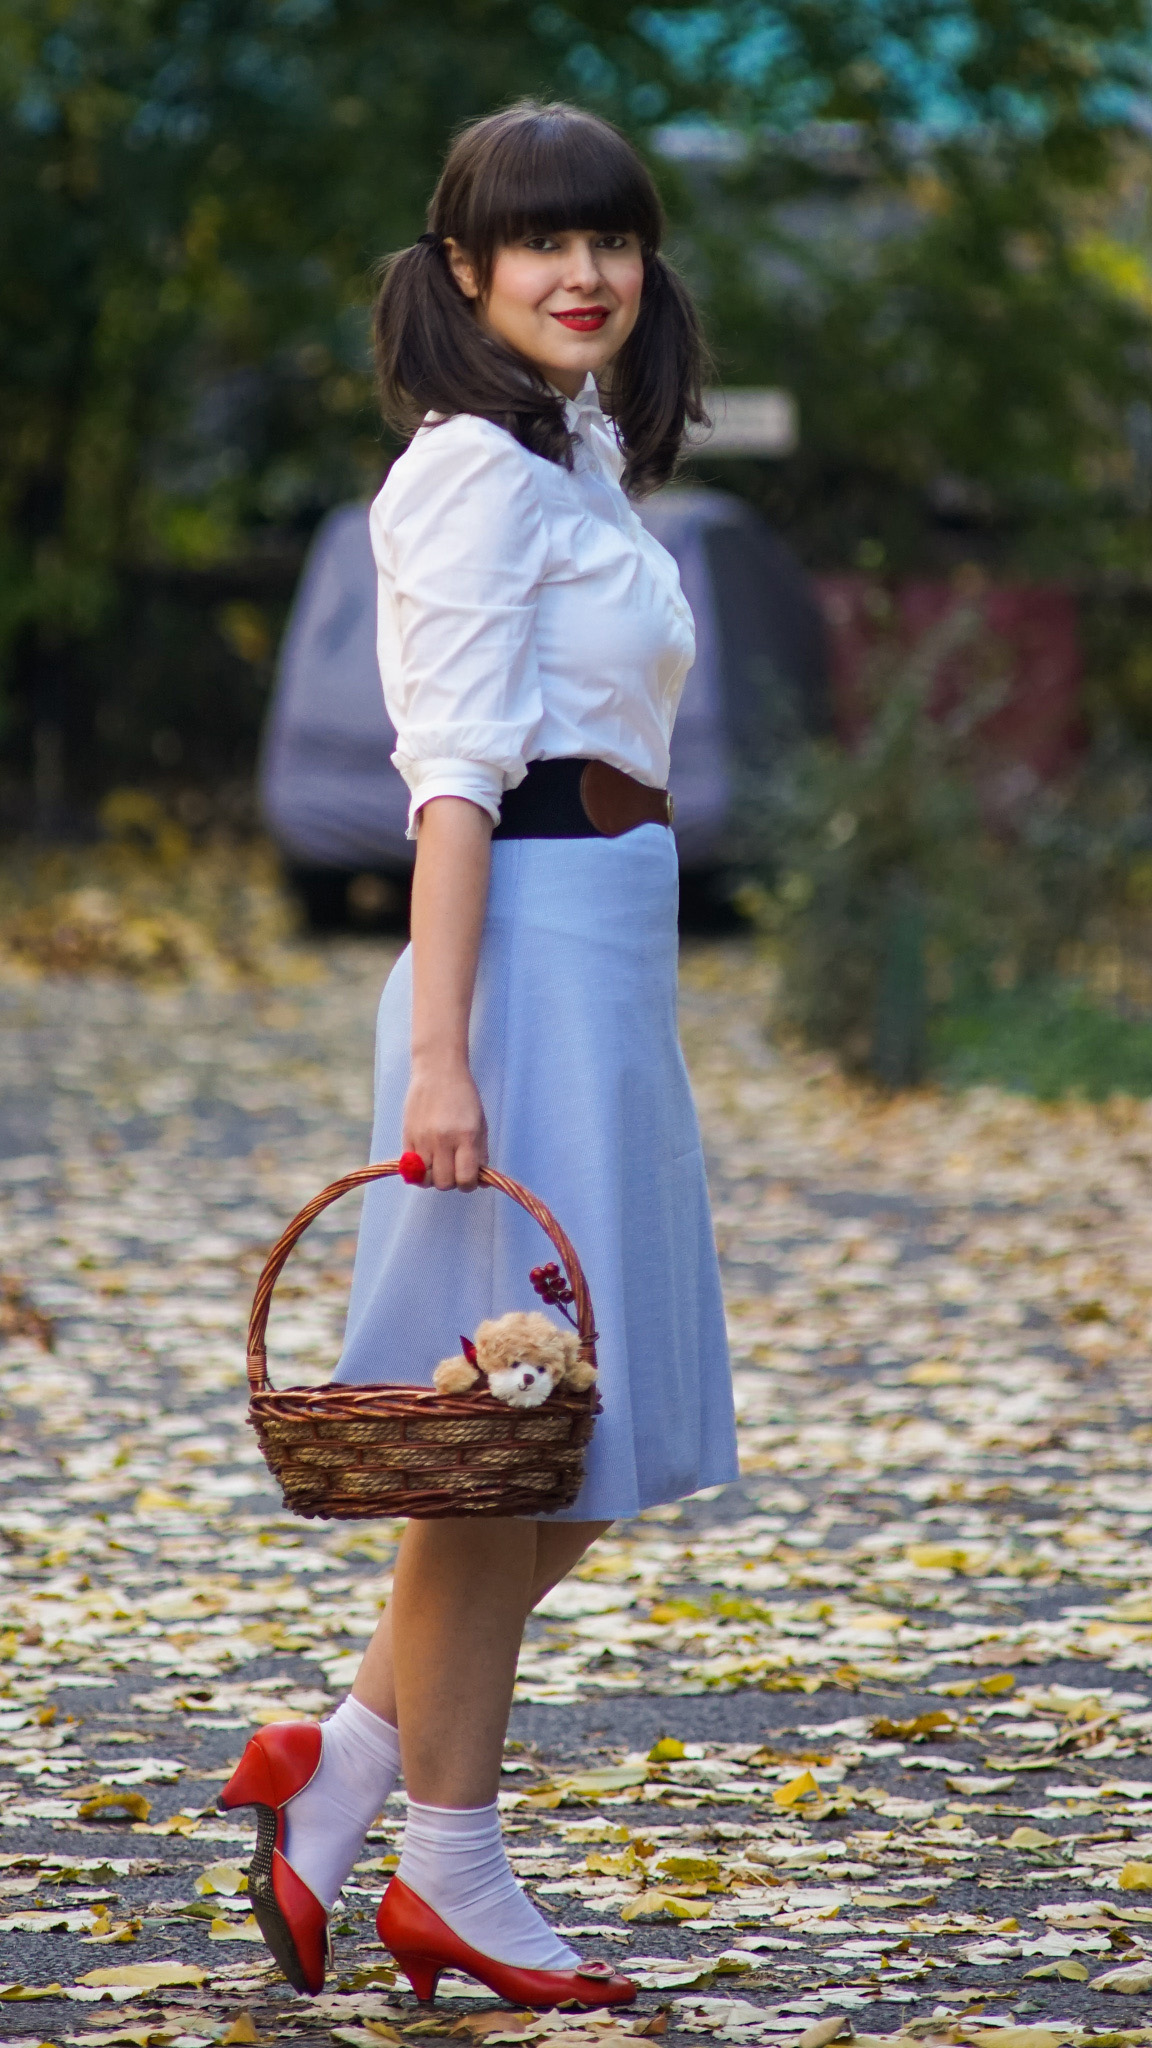 easy DIY Halloween costume dorothy white shirt blue skirt basket dog doggy stuffed toy stuffed bear red shoes white socks pony tails girly autumn 